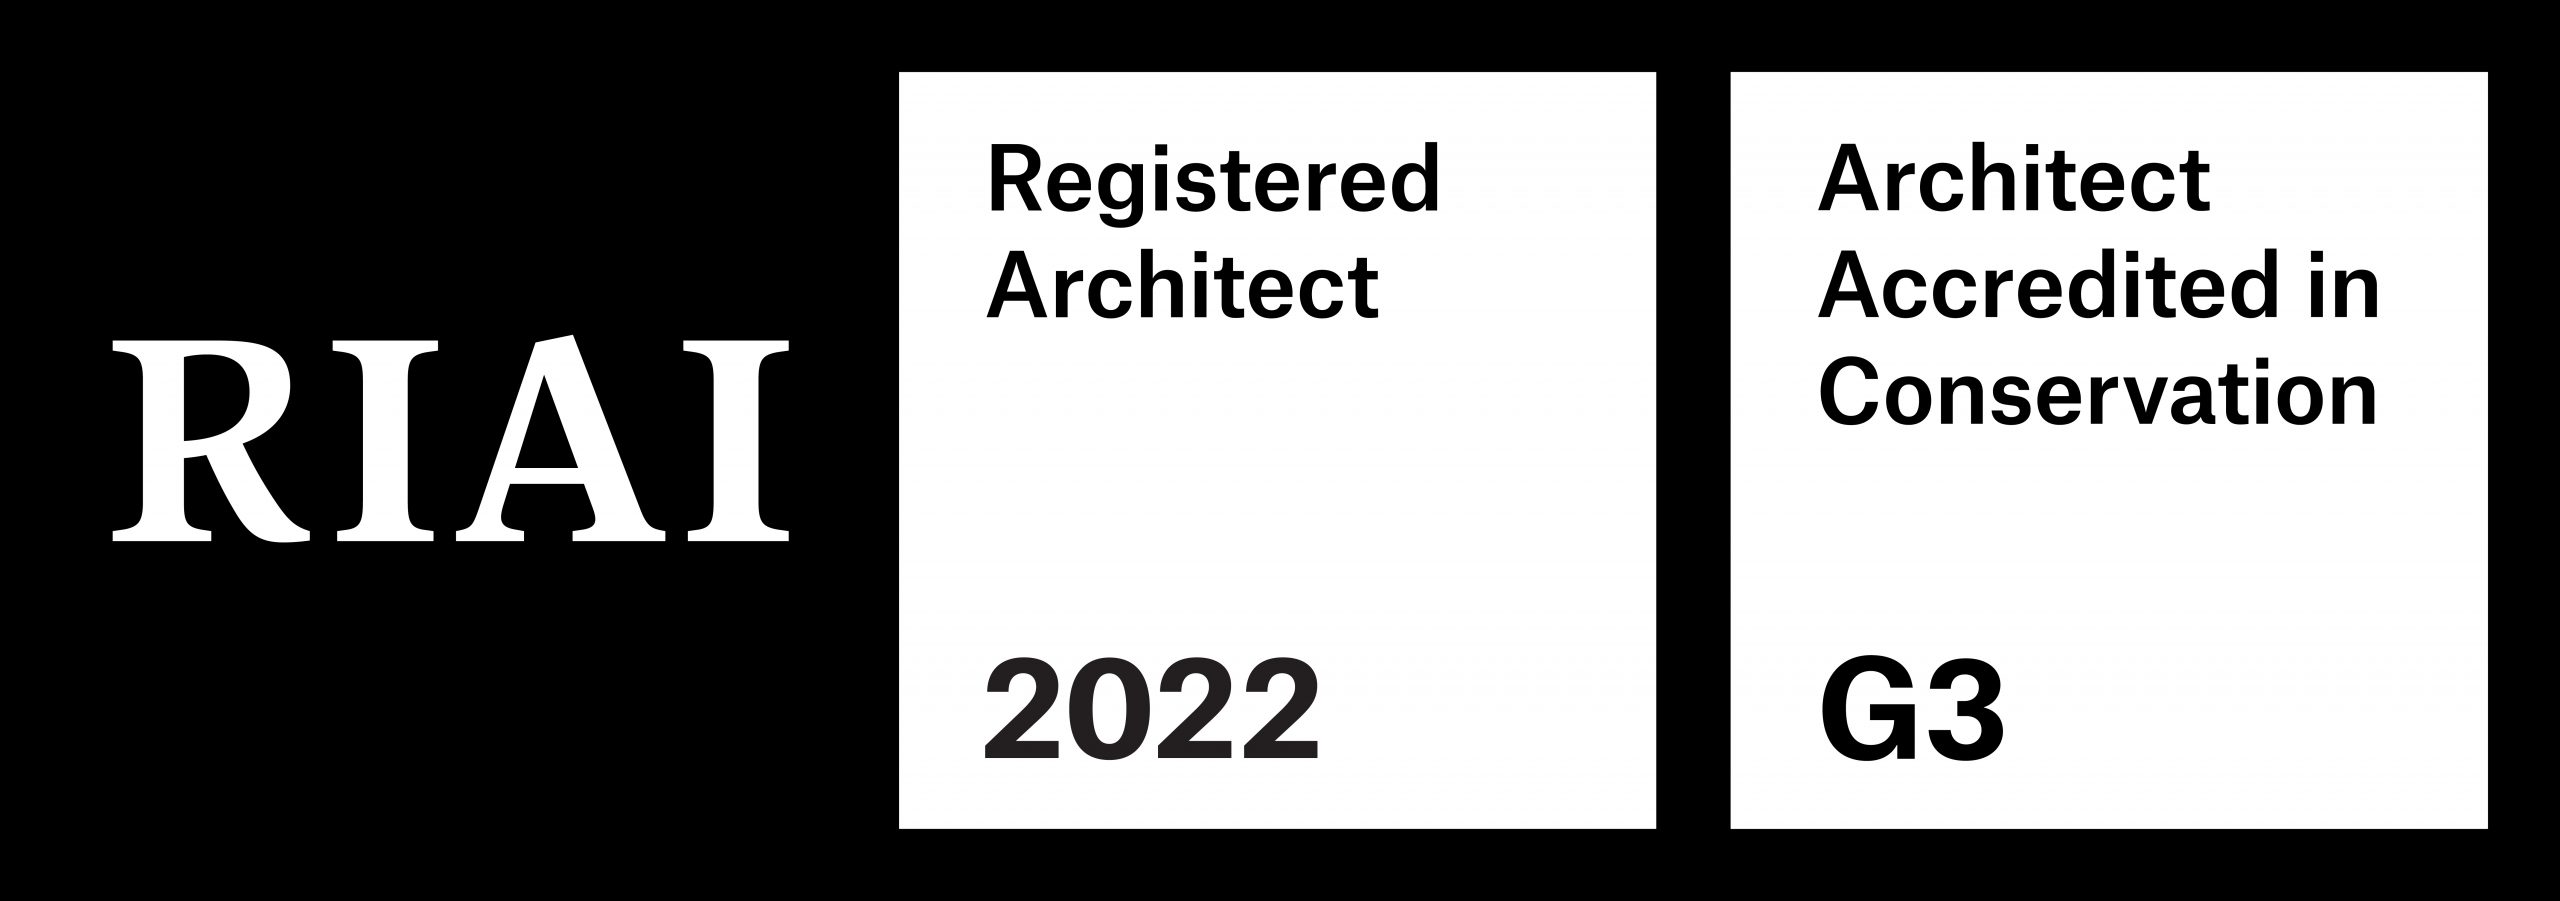 RIAI registered Architect